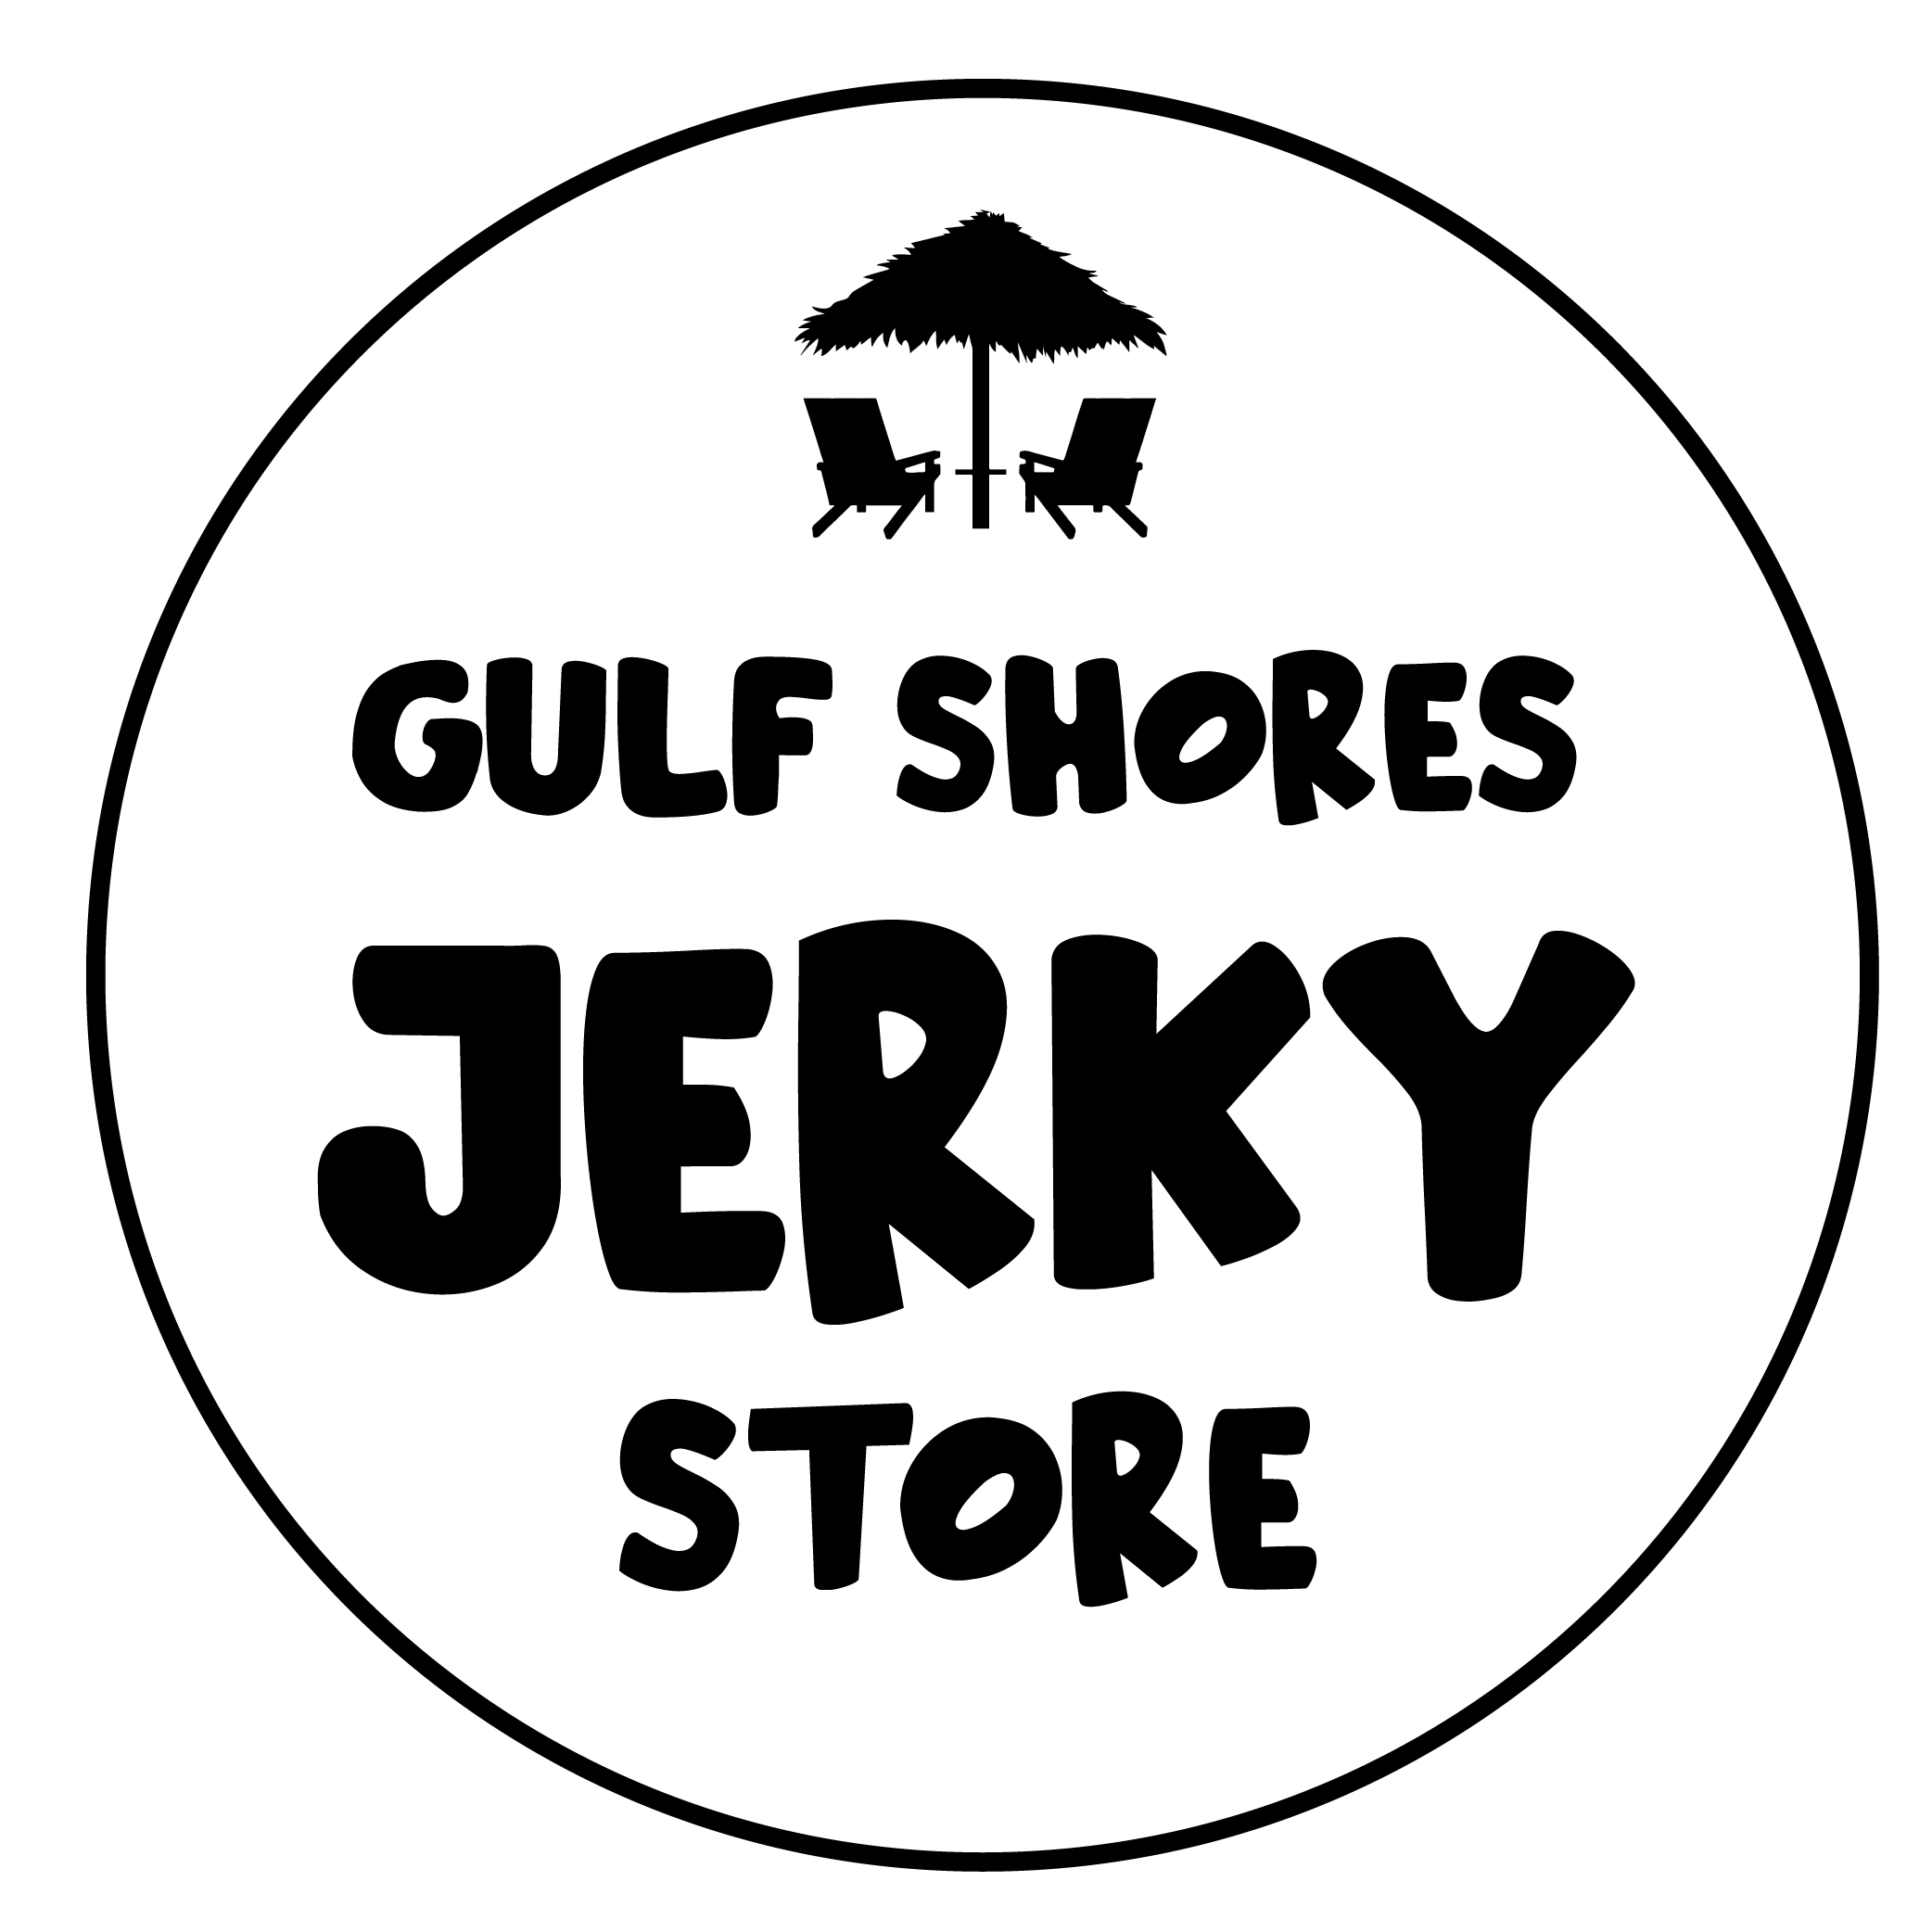 NO Shit Seasoning from Gulf Shores Jerky Store